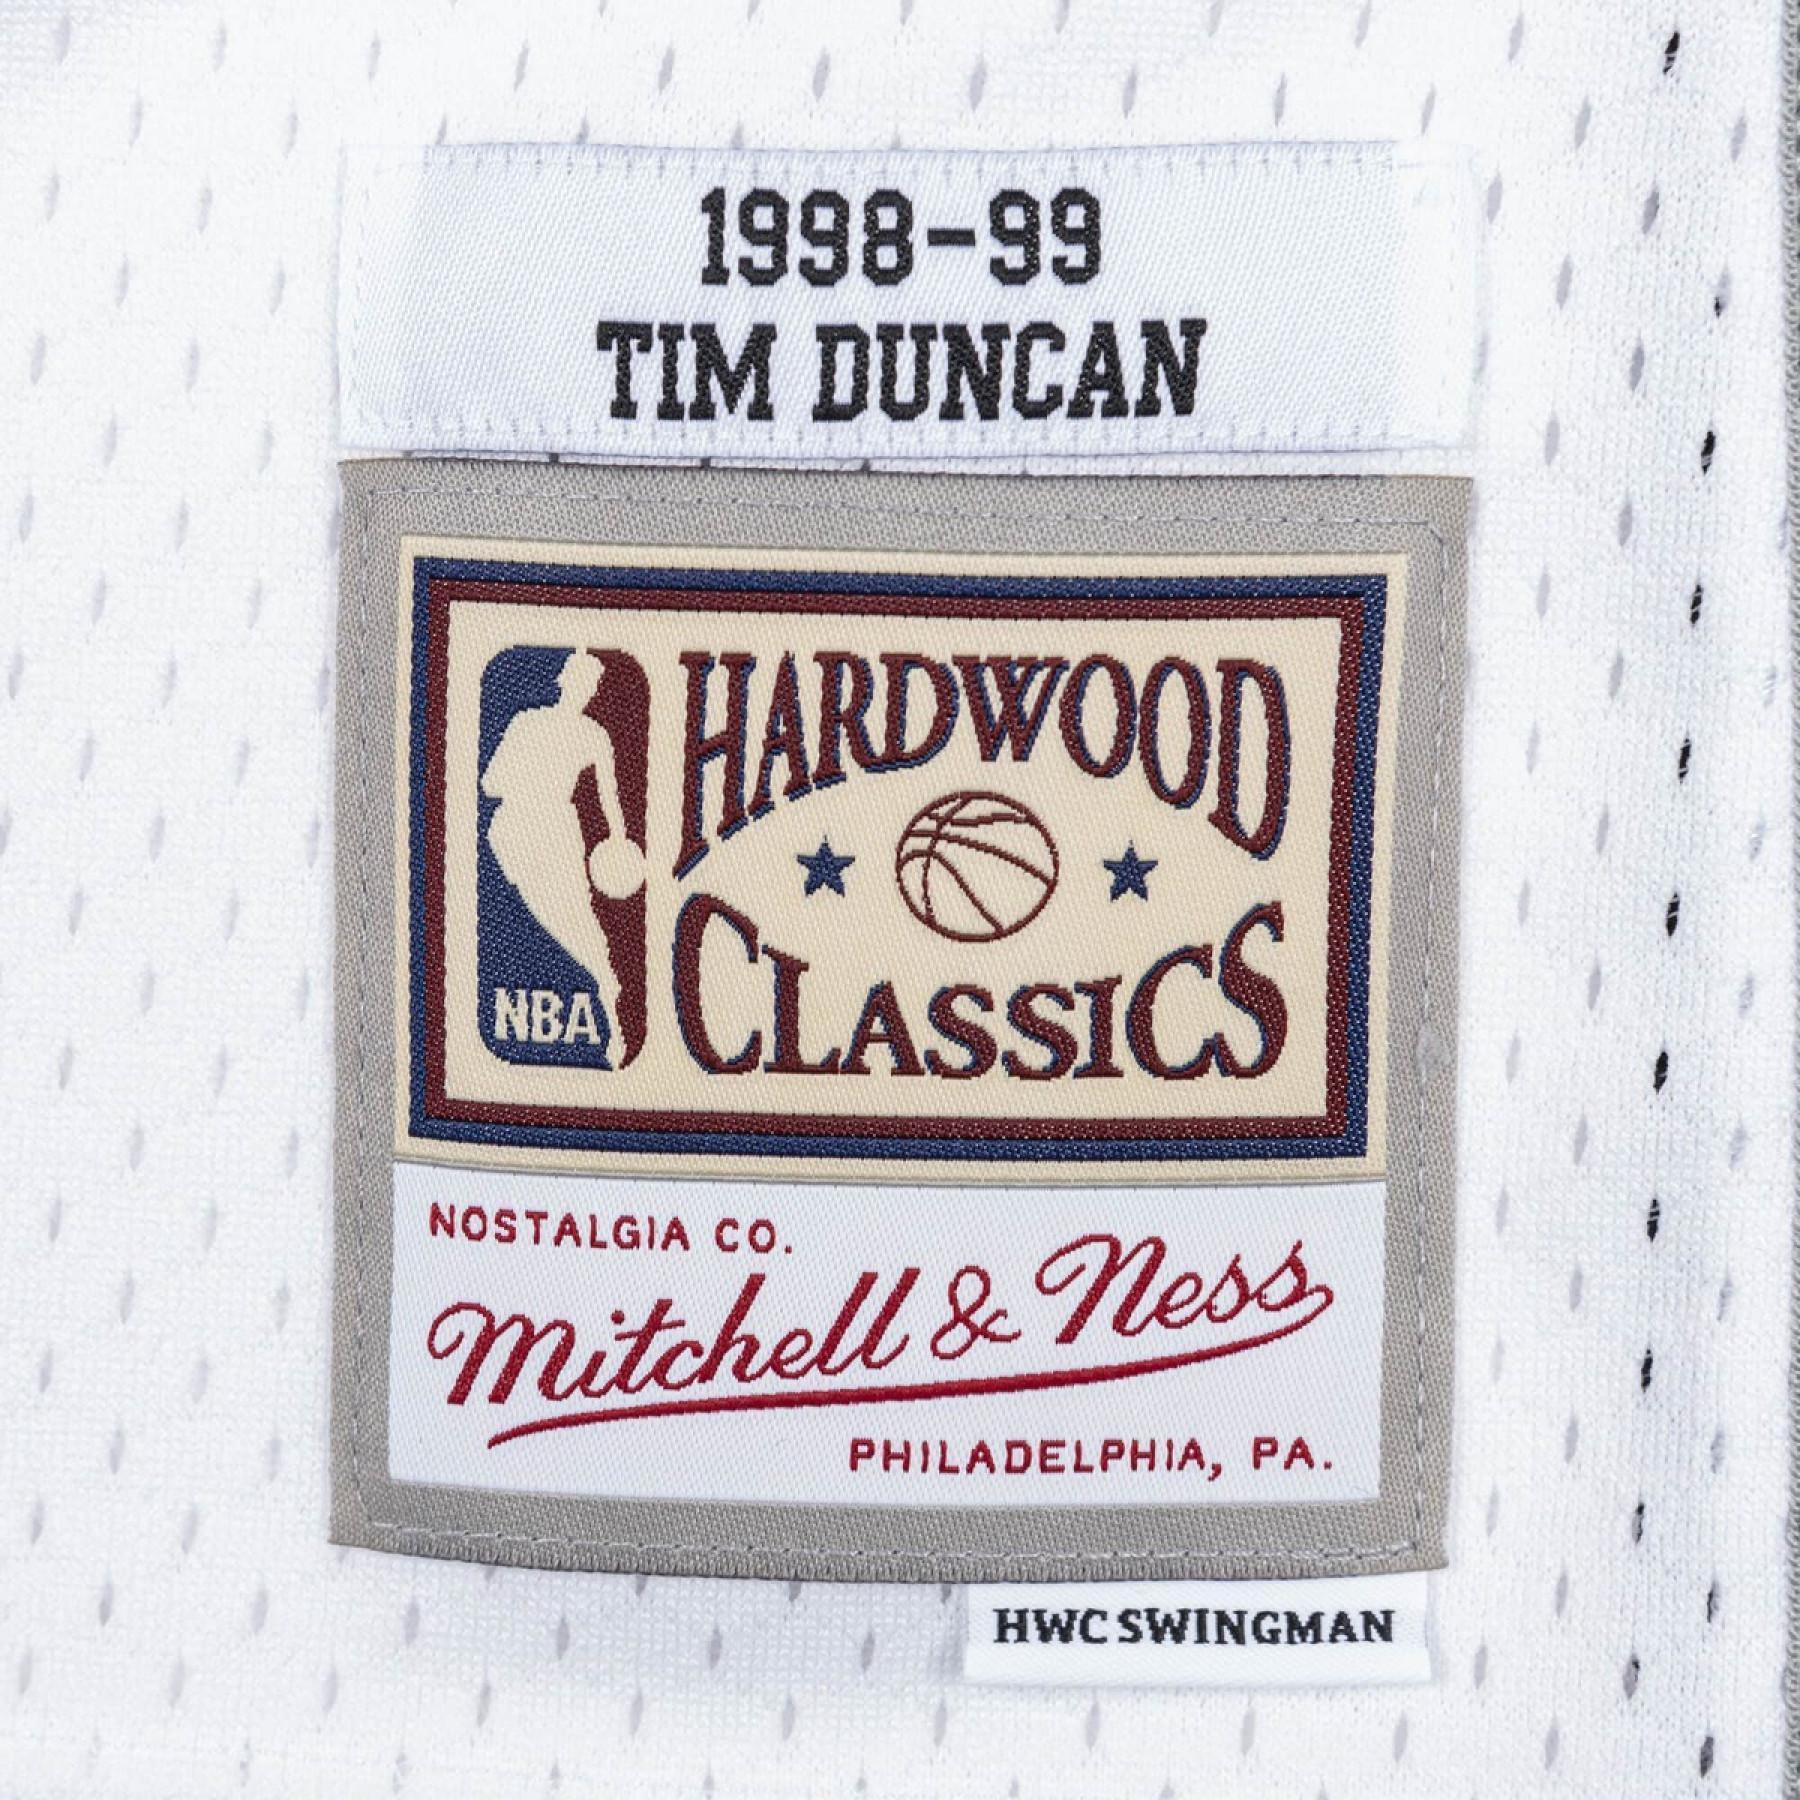 Maillot San Antonio Spurs Tim Duncan 1998/99